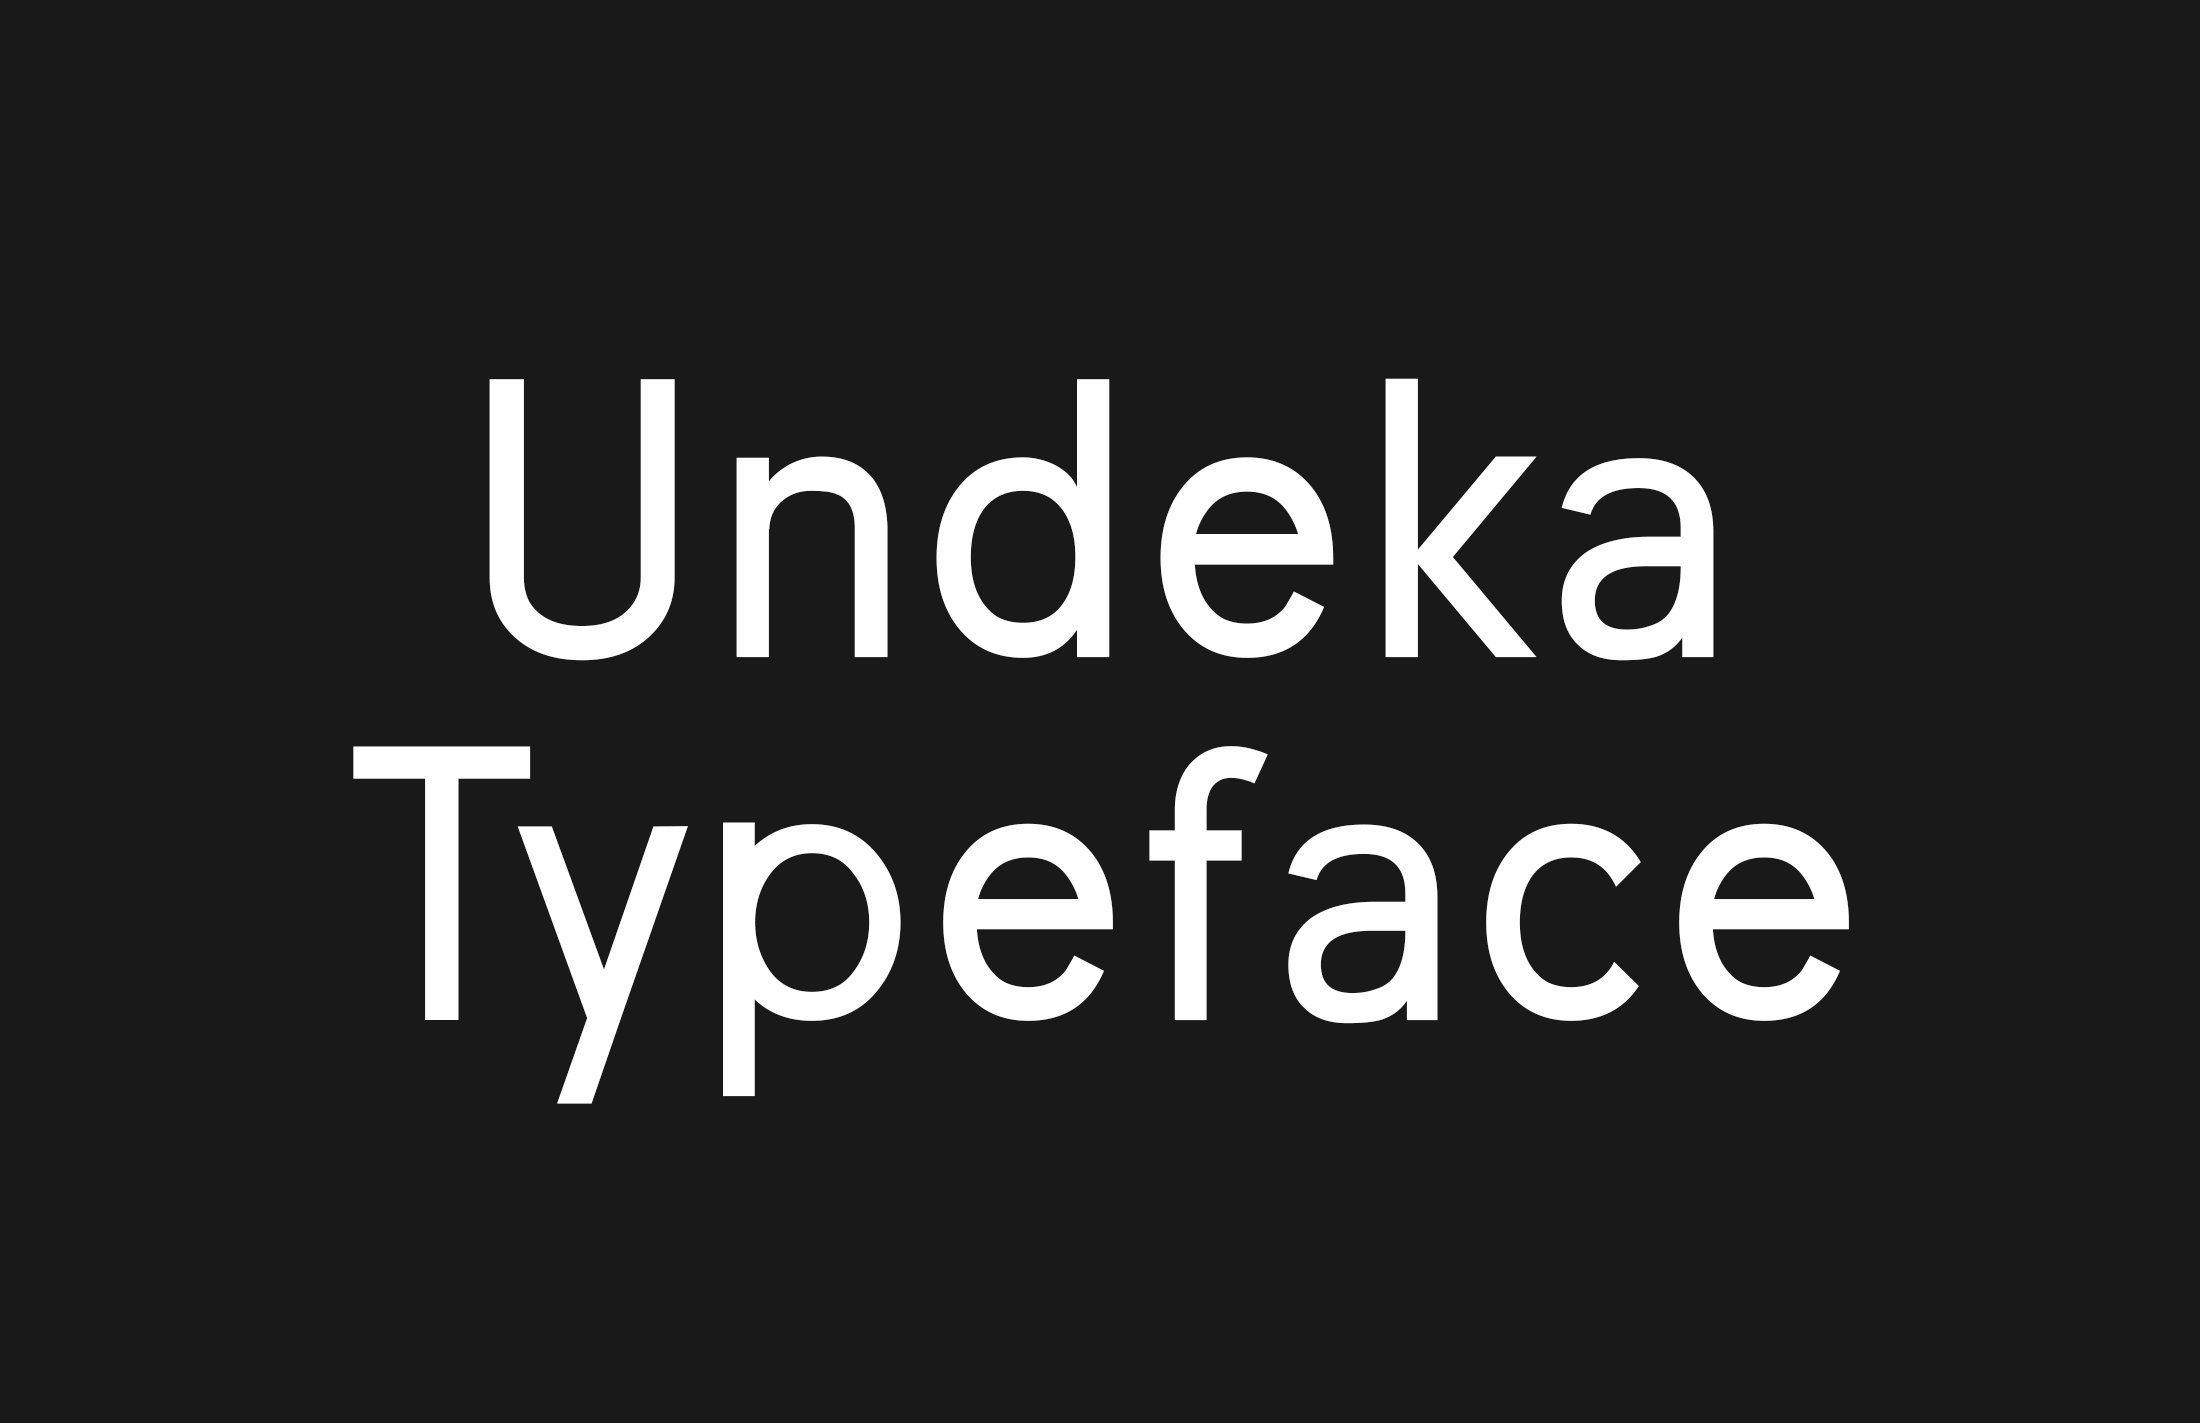 Undeka San Serif Font cover image.